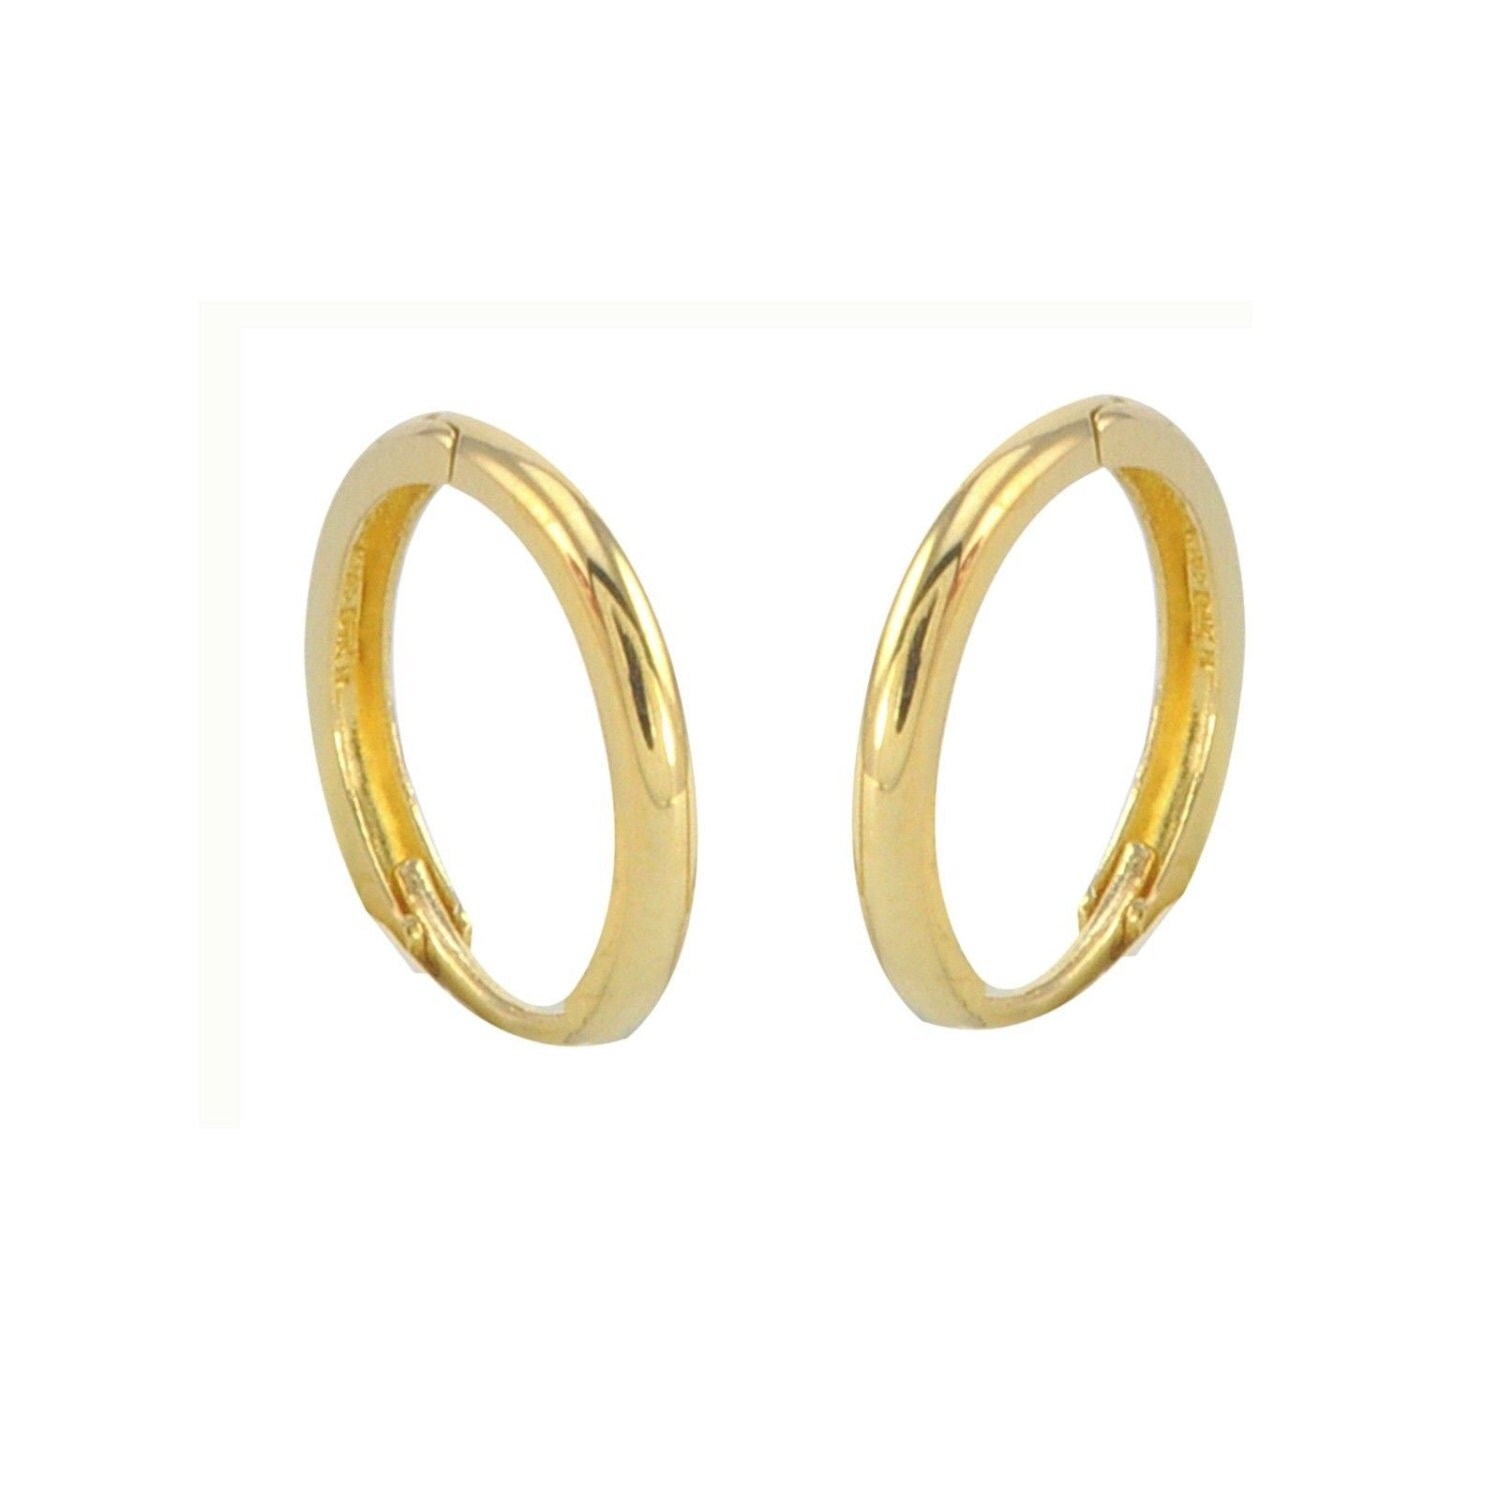 10k Yellow Gold Hoop Earrings 15mm Medium-Large by click4gems